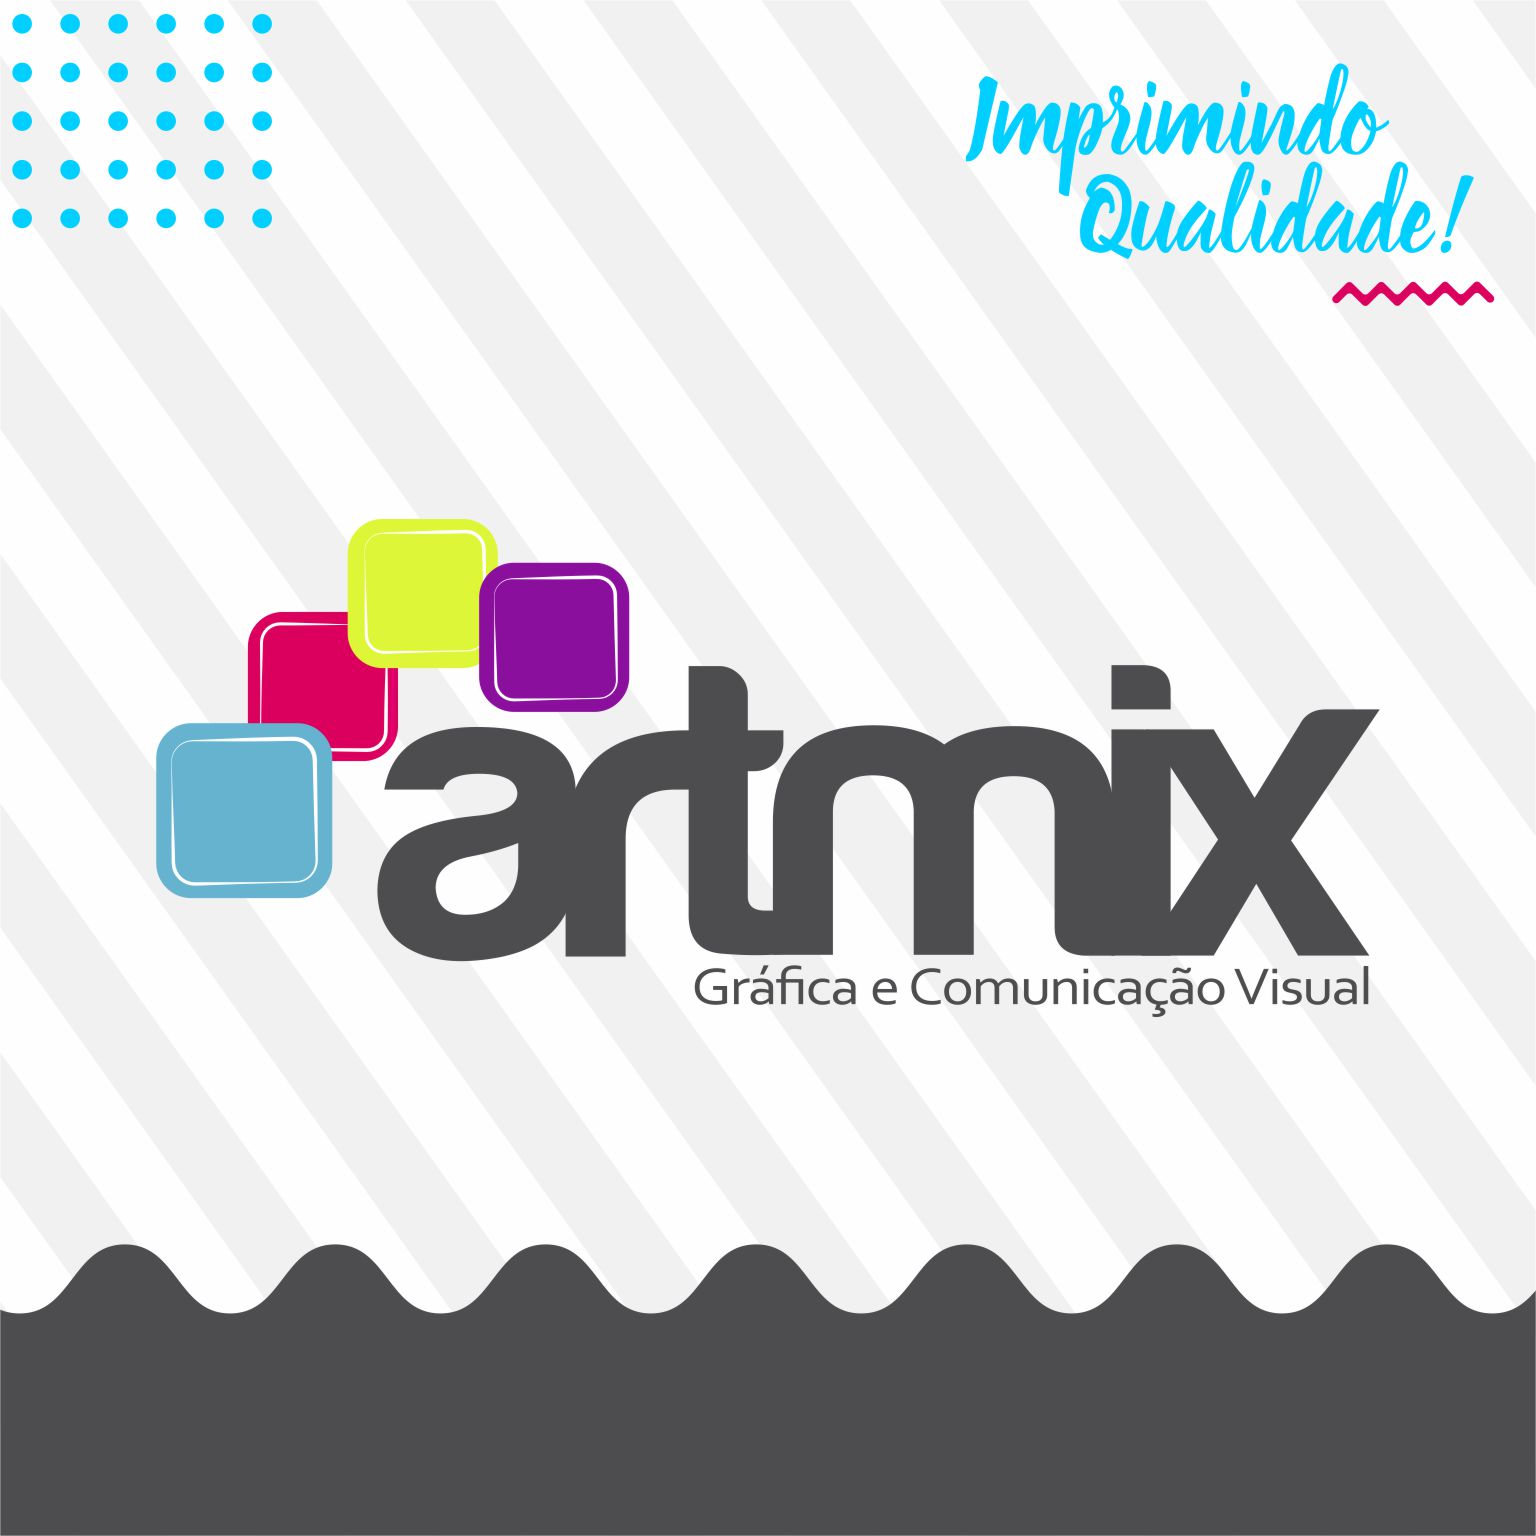 Artmix